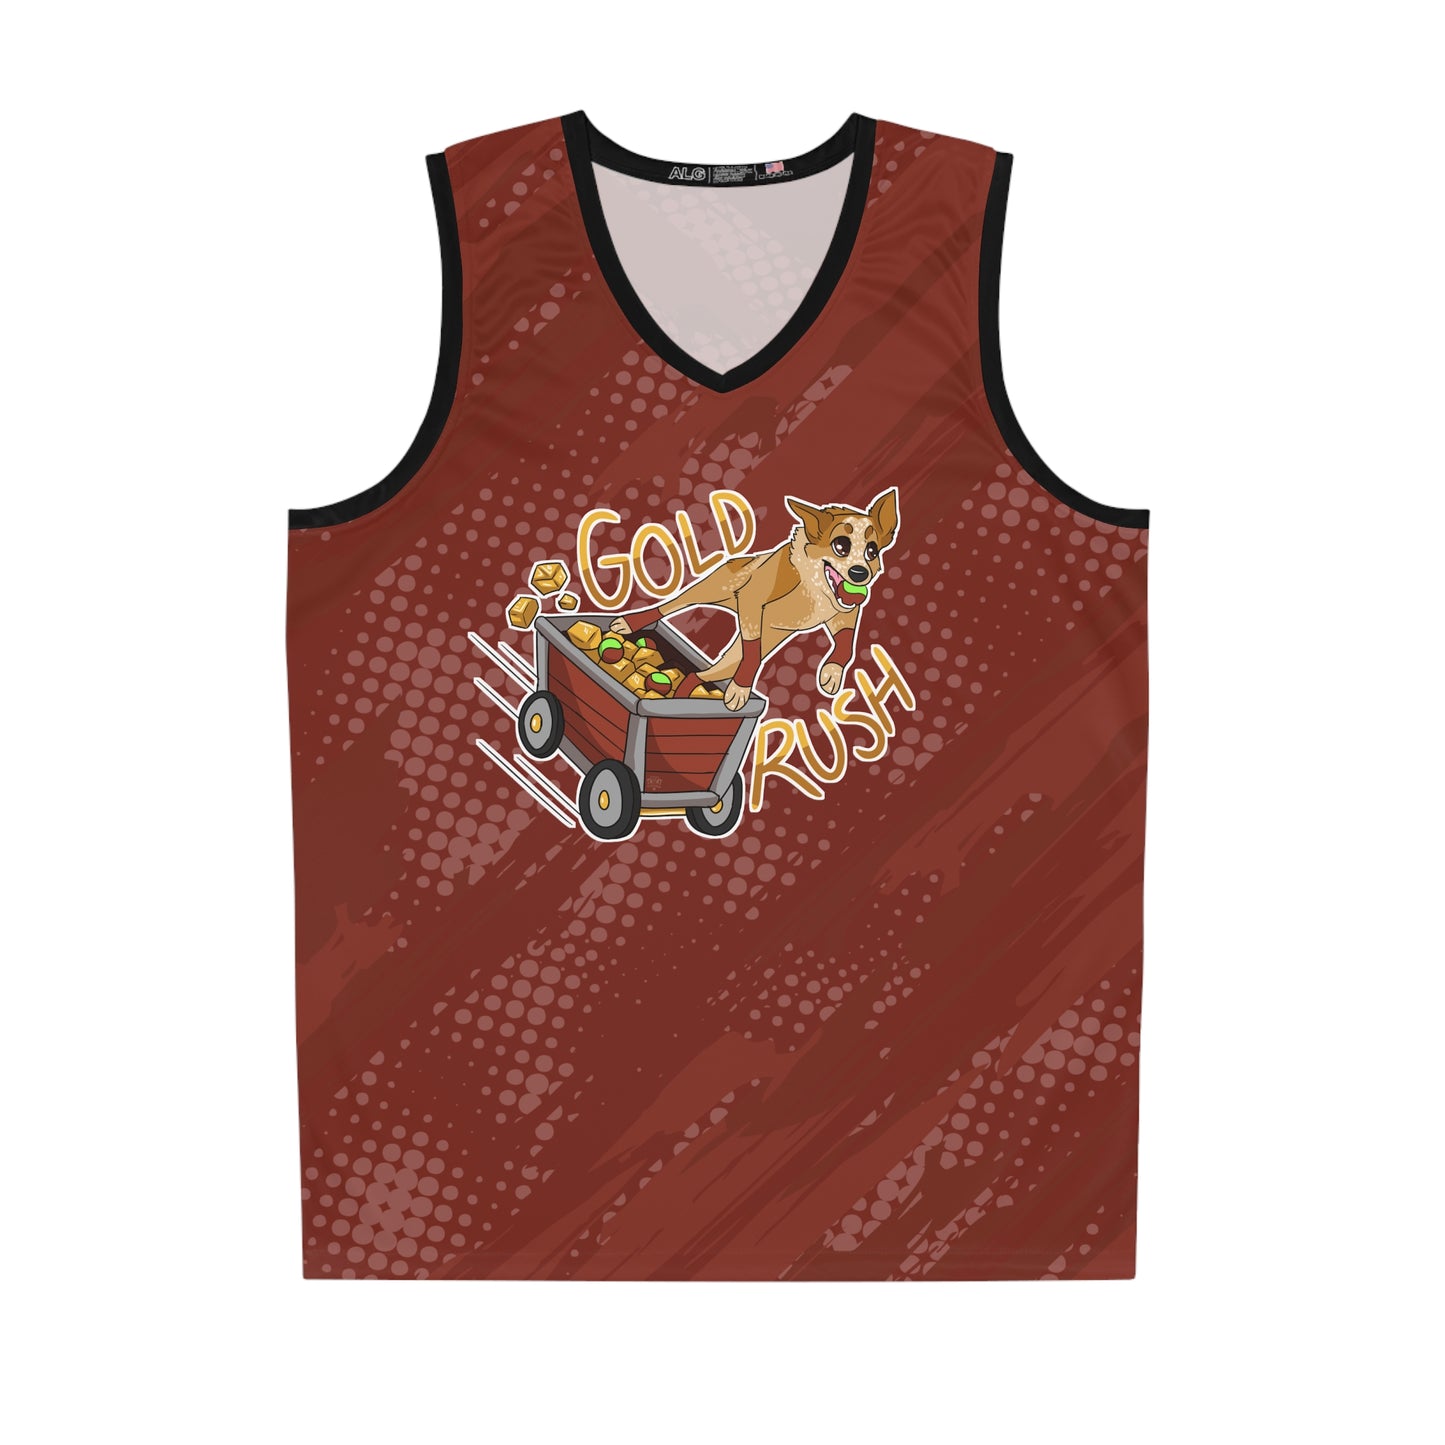 GOLD RUSH FLYBALL Basketball Jersey (AOP)